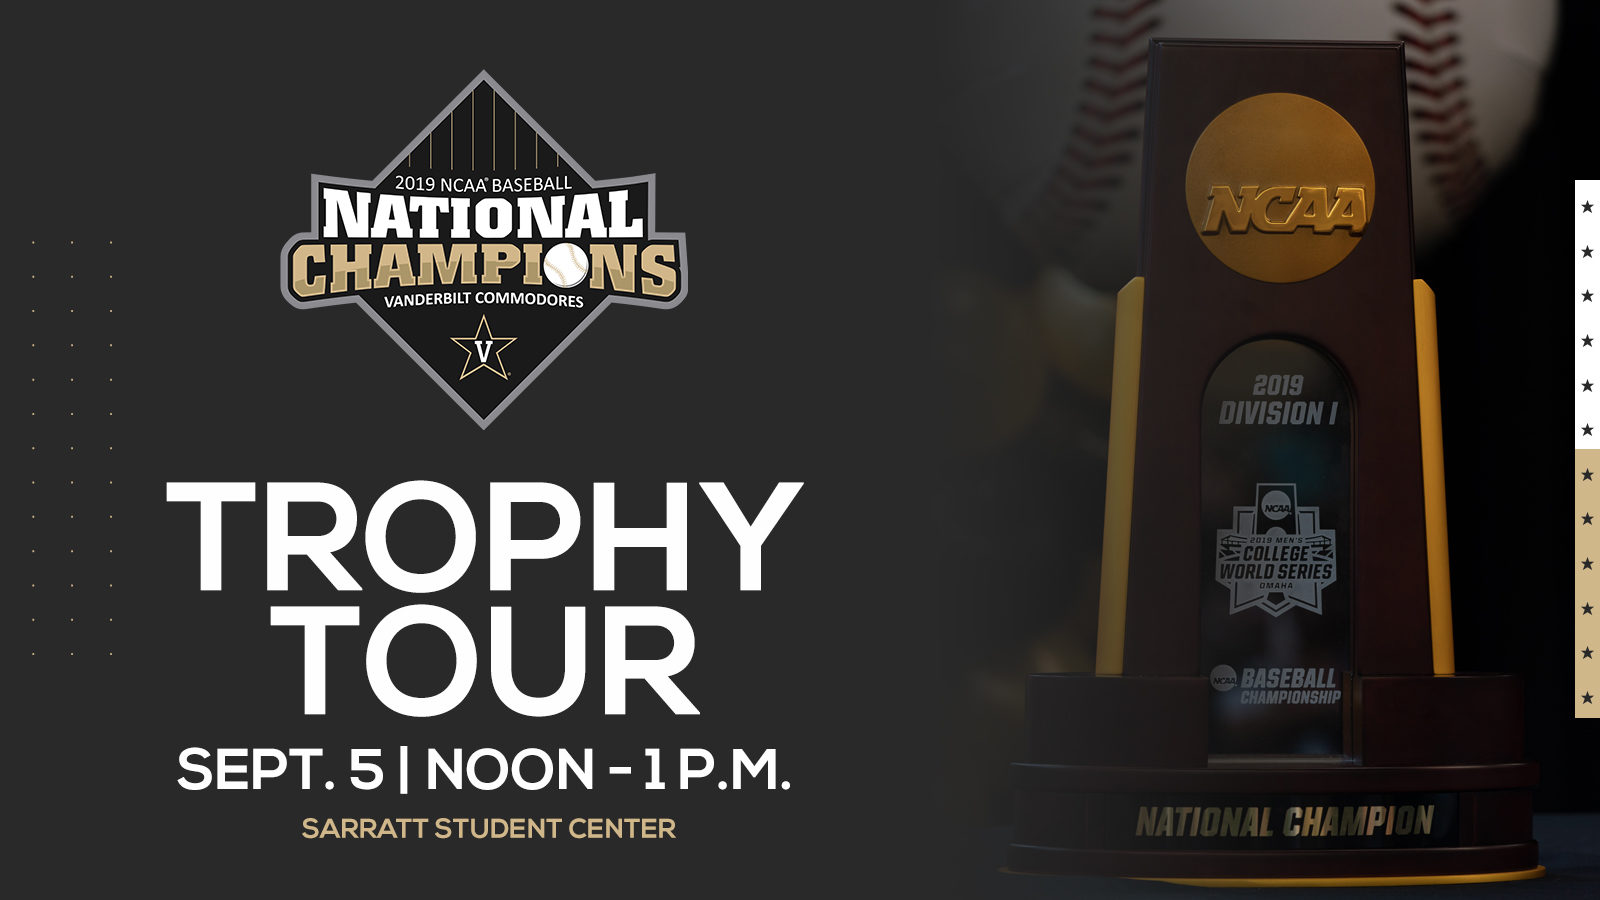 Take a photo with VU Baseball's championship trophy Sept. 5